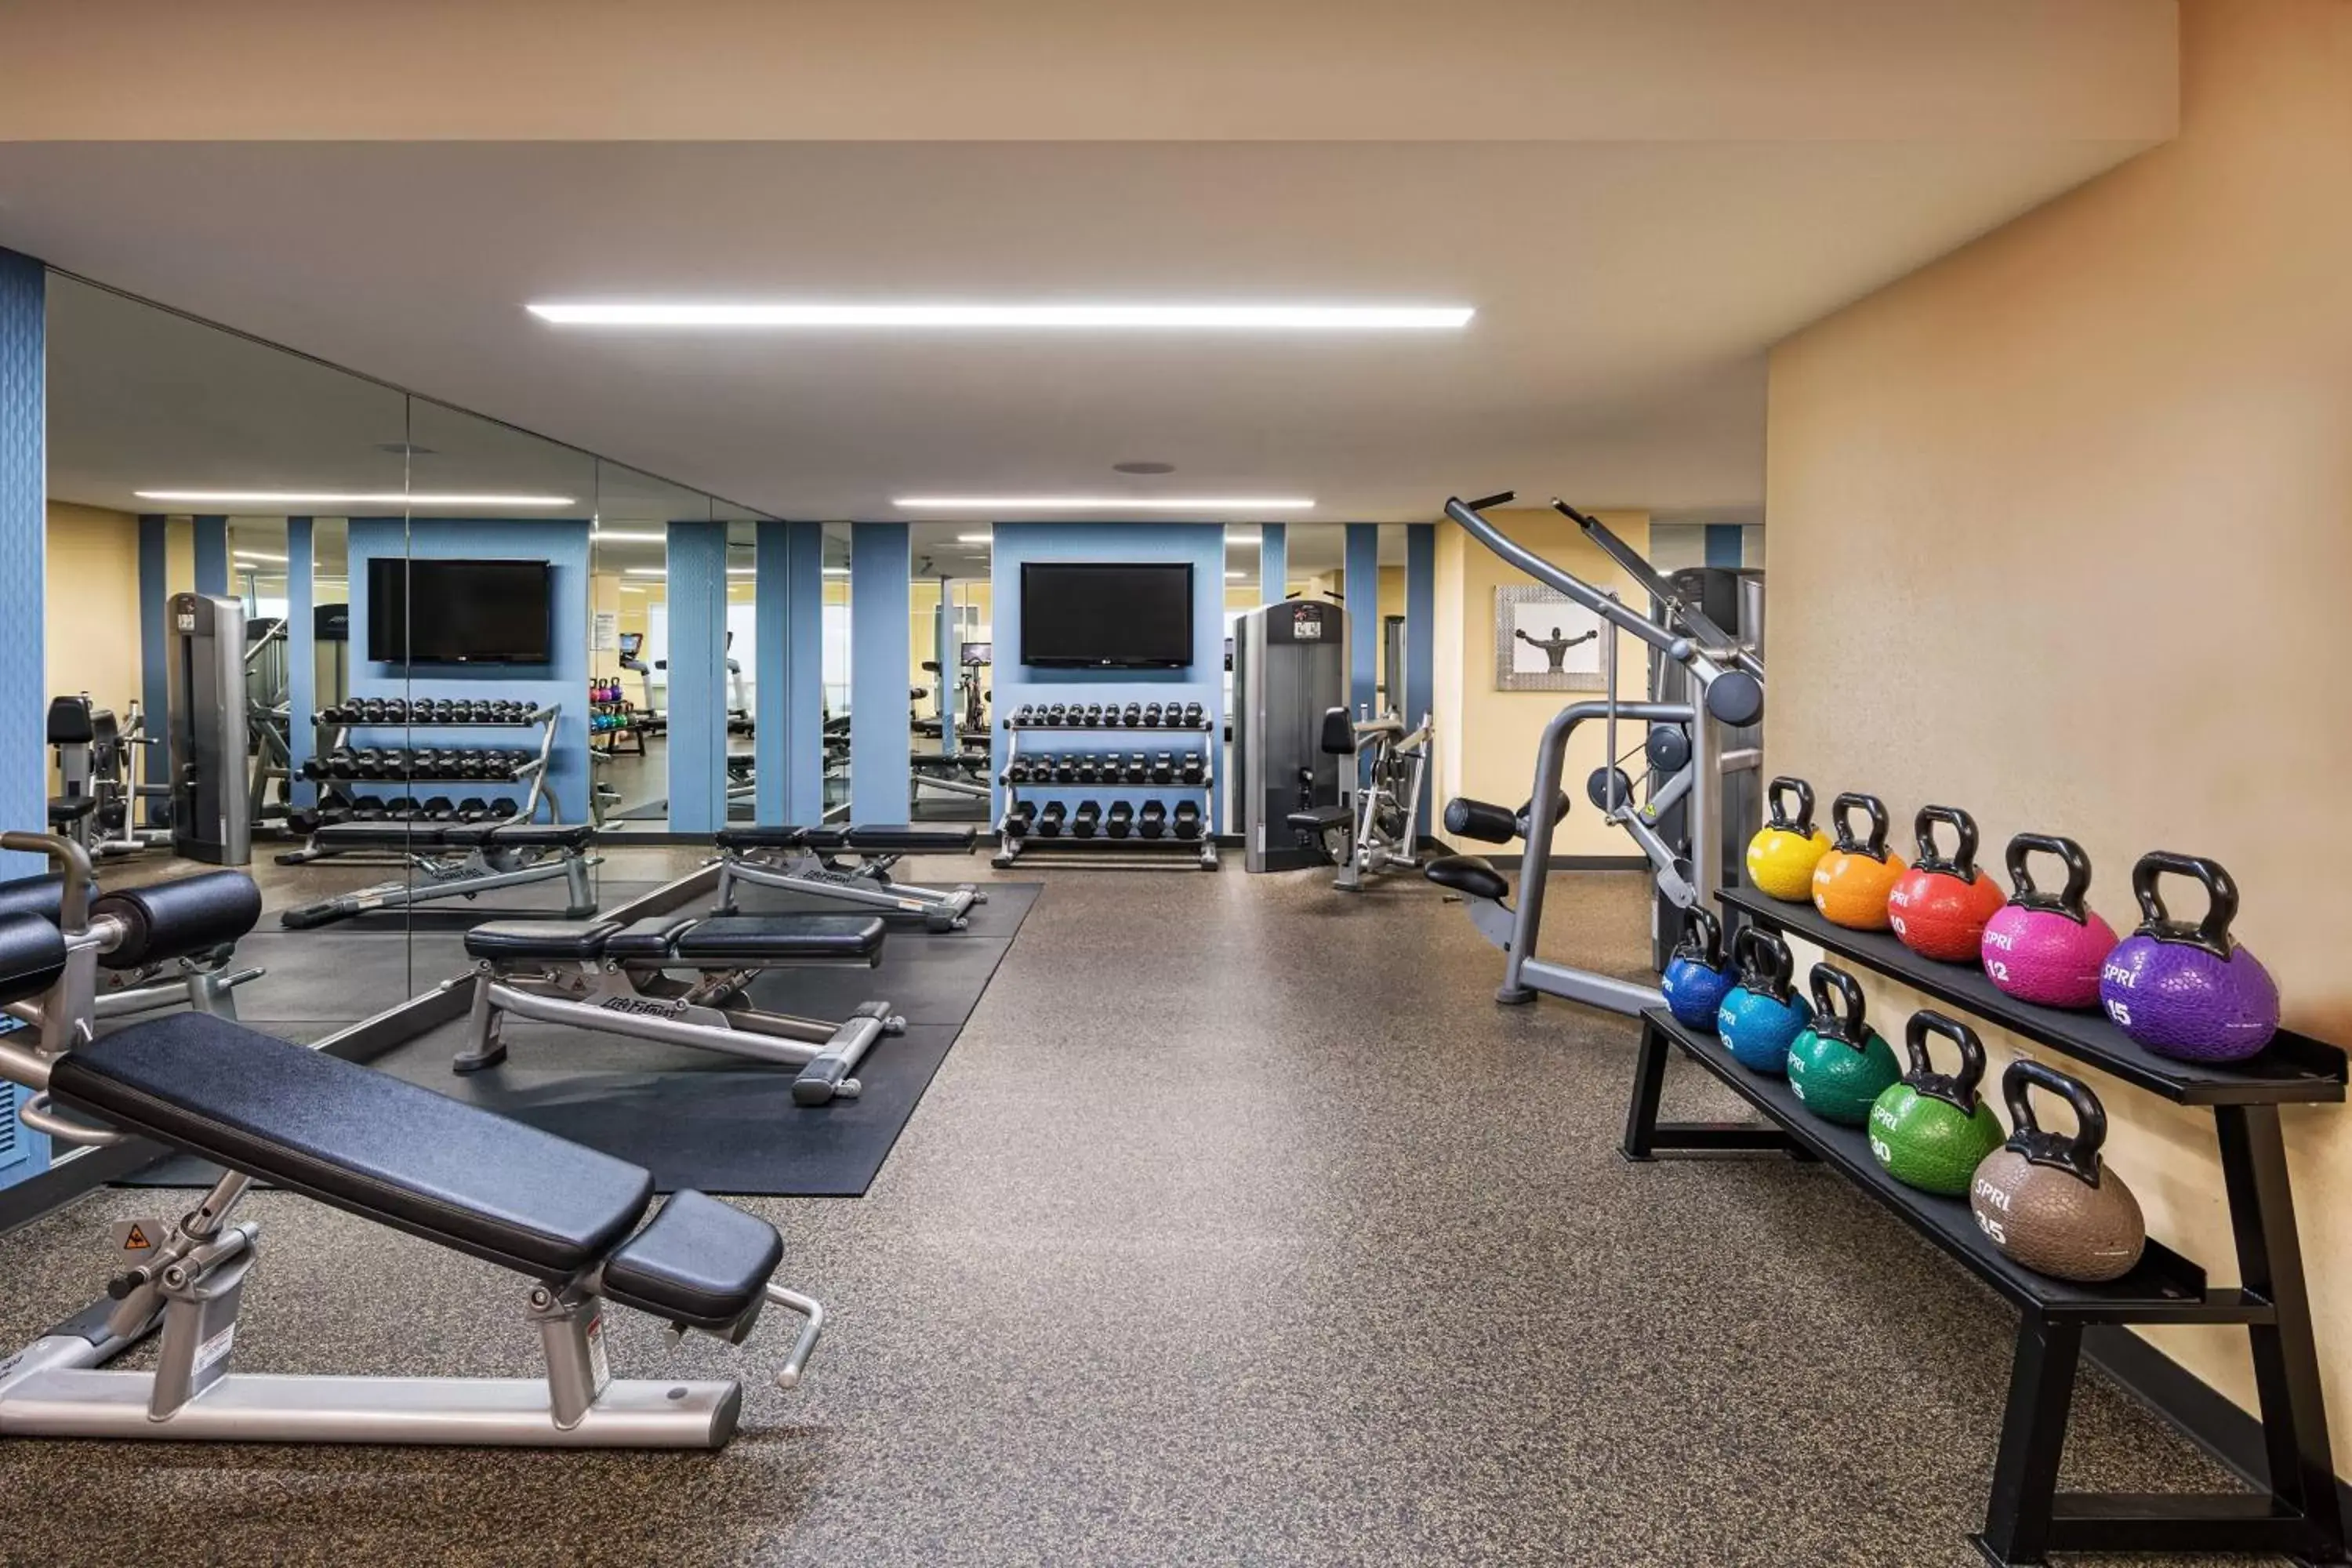 Fitness centre/facilities, Fitness Center/Facilities in Boston Marriott Long Wharf